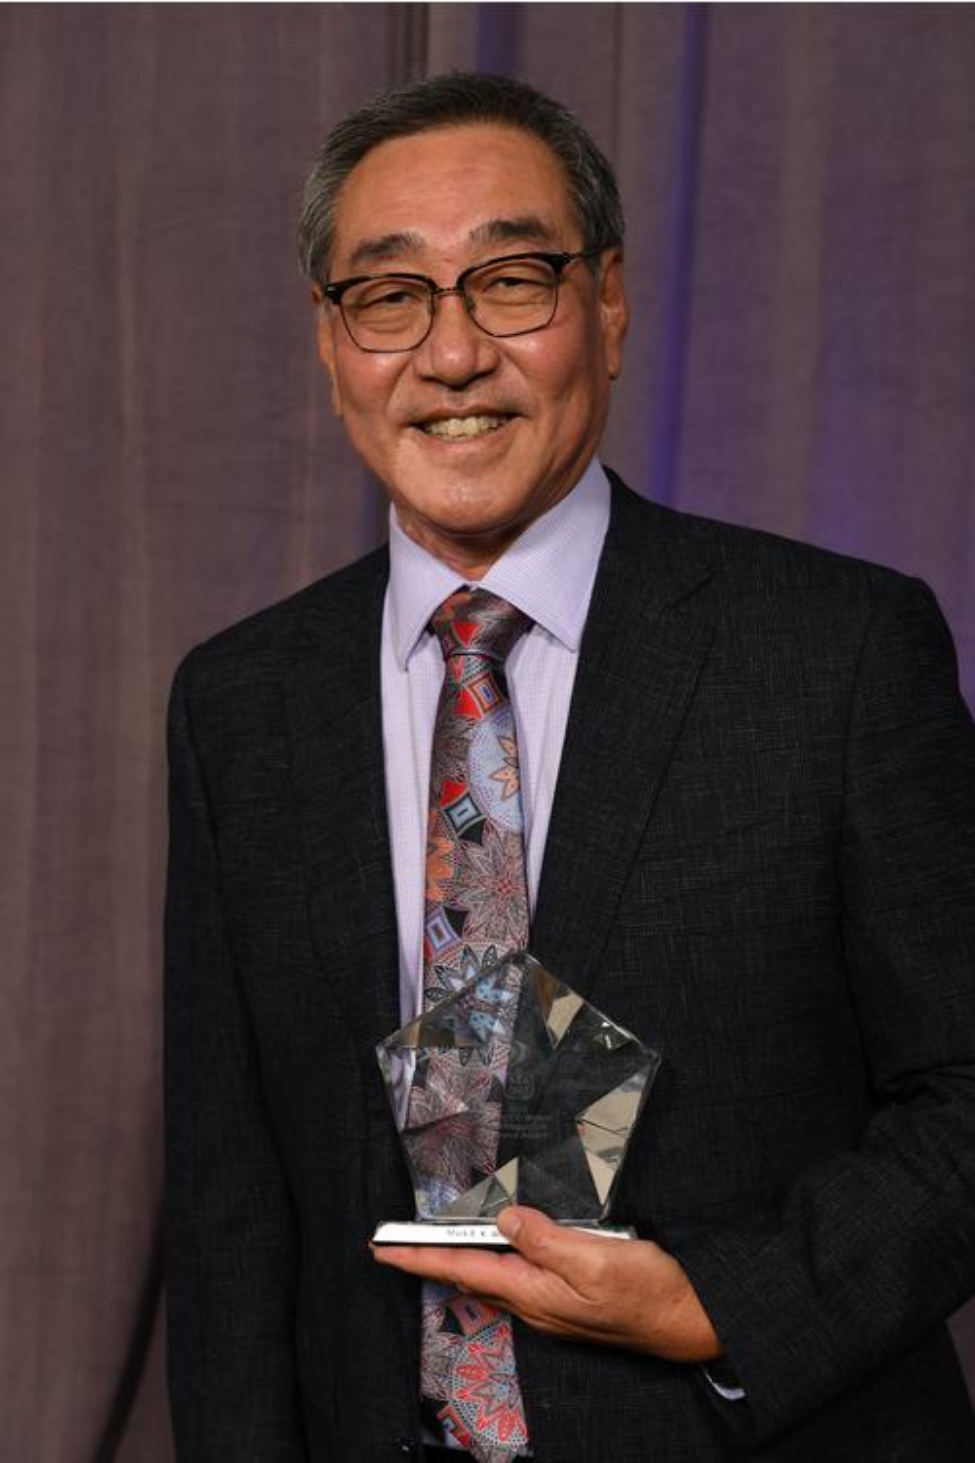 Dr. Mark Wong poses with his Robert V. Walker Distinguished Service Award.